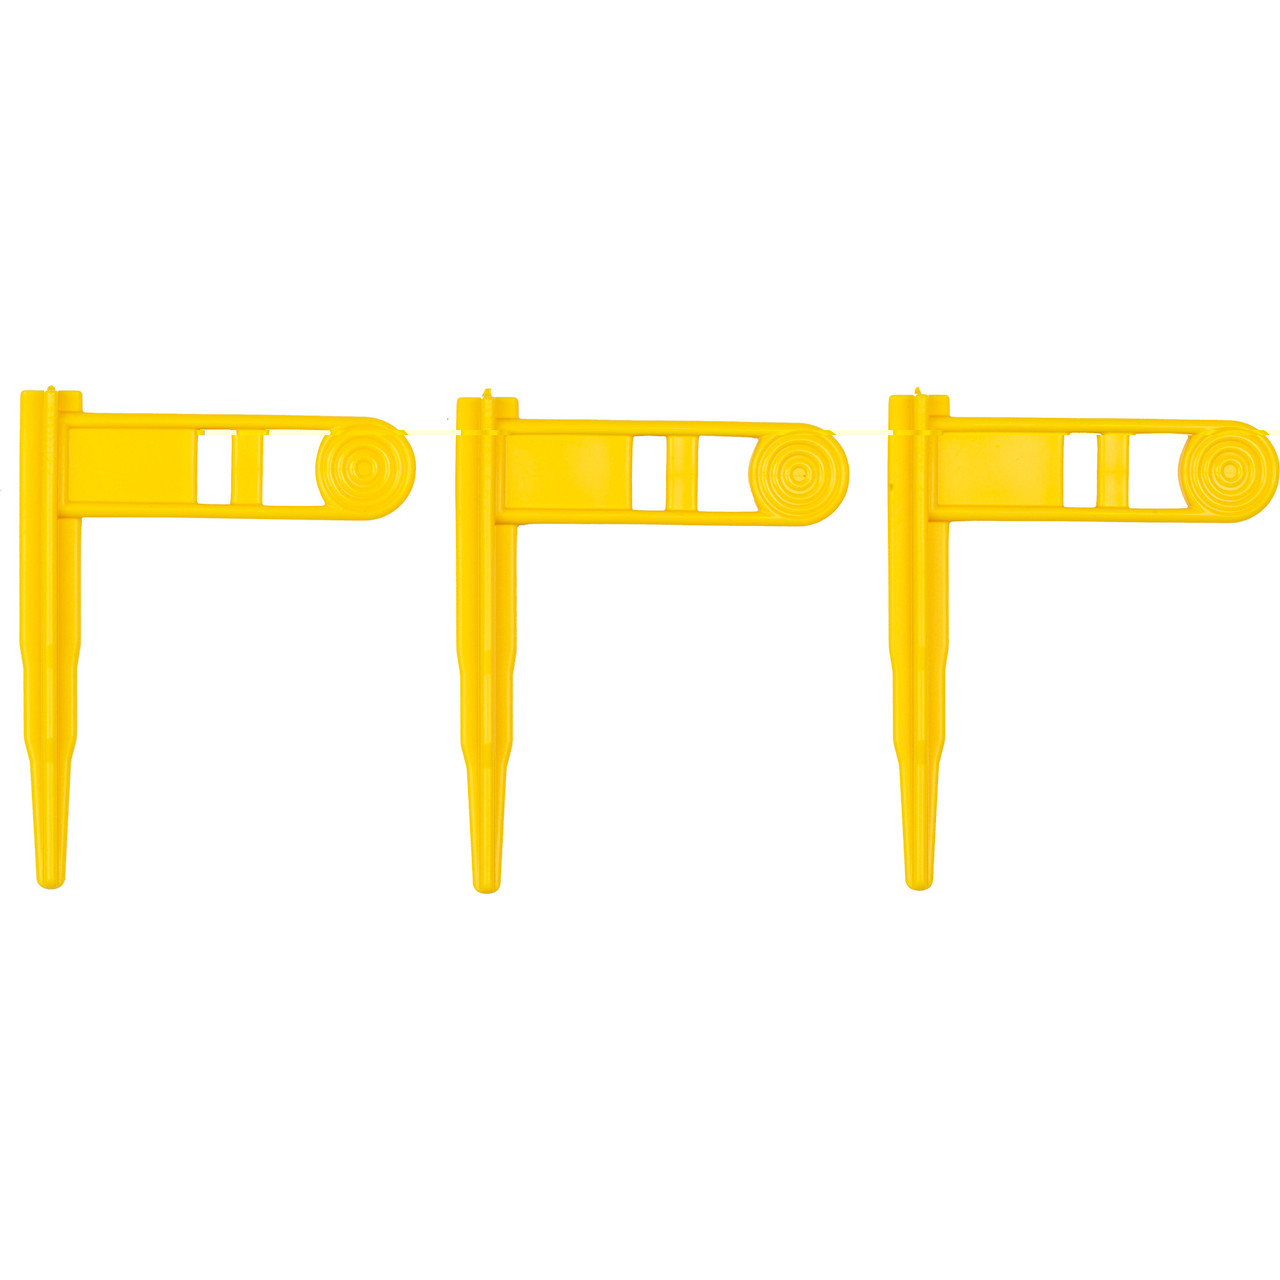 Ergo Grip 4984-3PK-YL Safety Chamber Flag 3pk Yellow